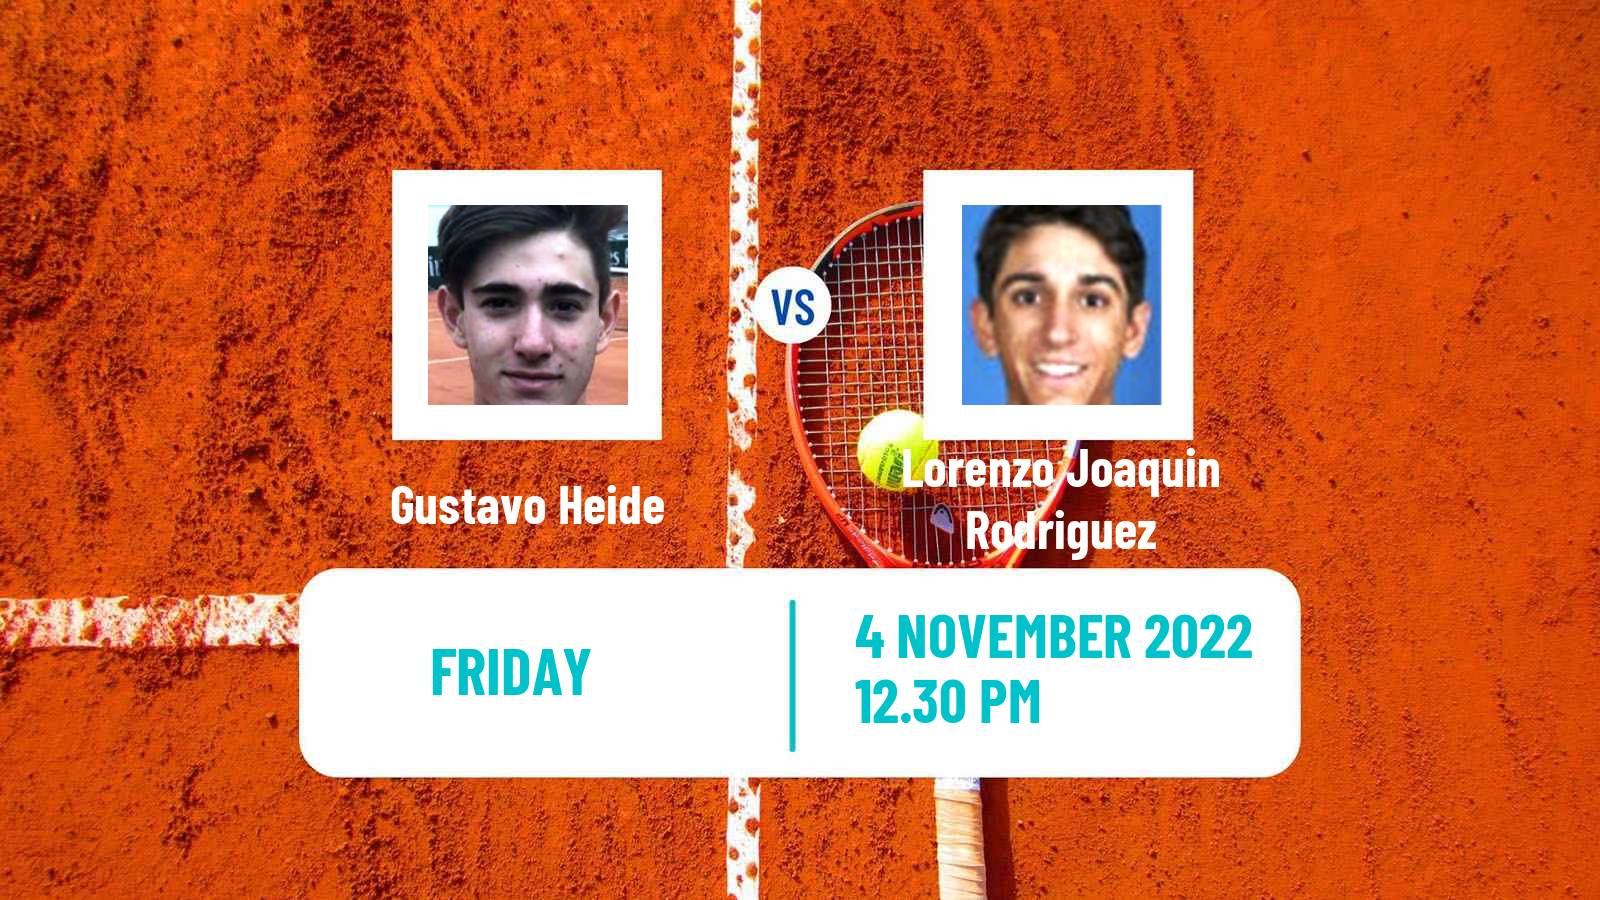 Tennis ITF Tournaments Gustavo Heide - Lorenzo Joaquin Rodriguez